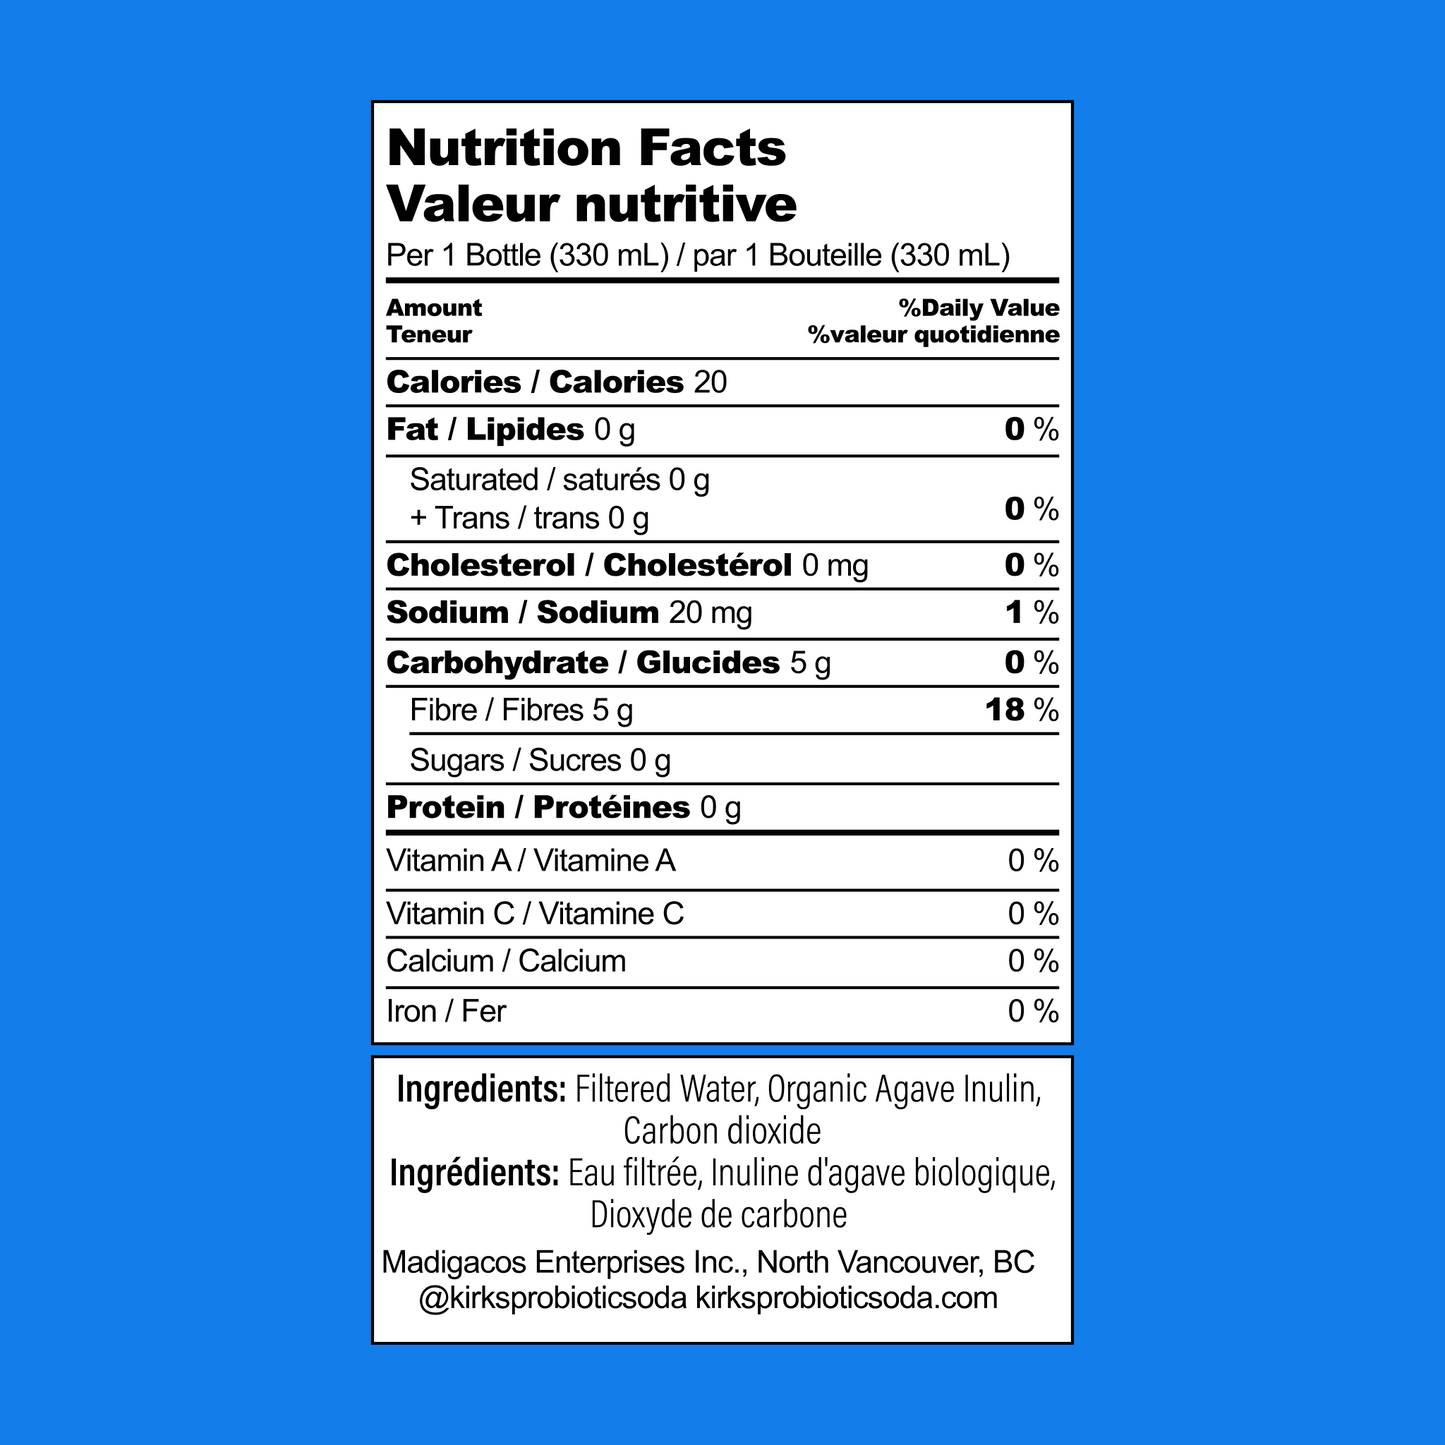 Nutritional information label on a bottle of Kirk's prebiotic Soda